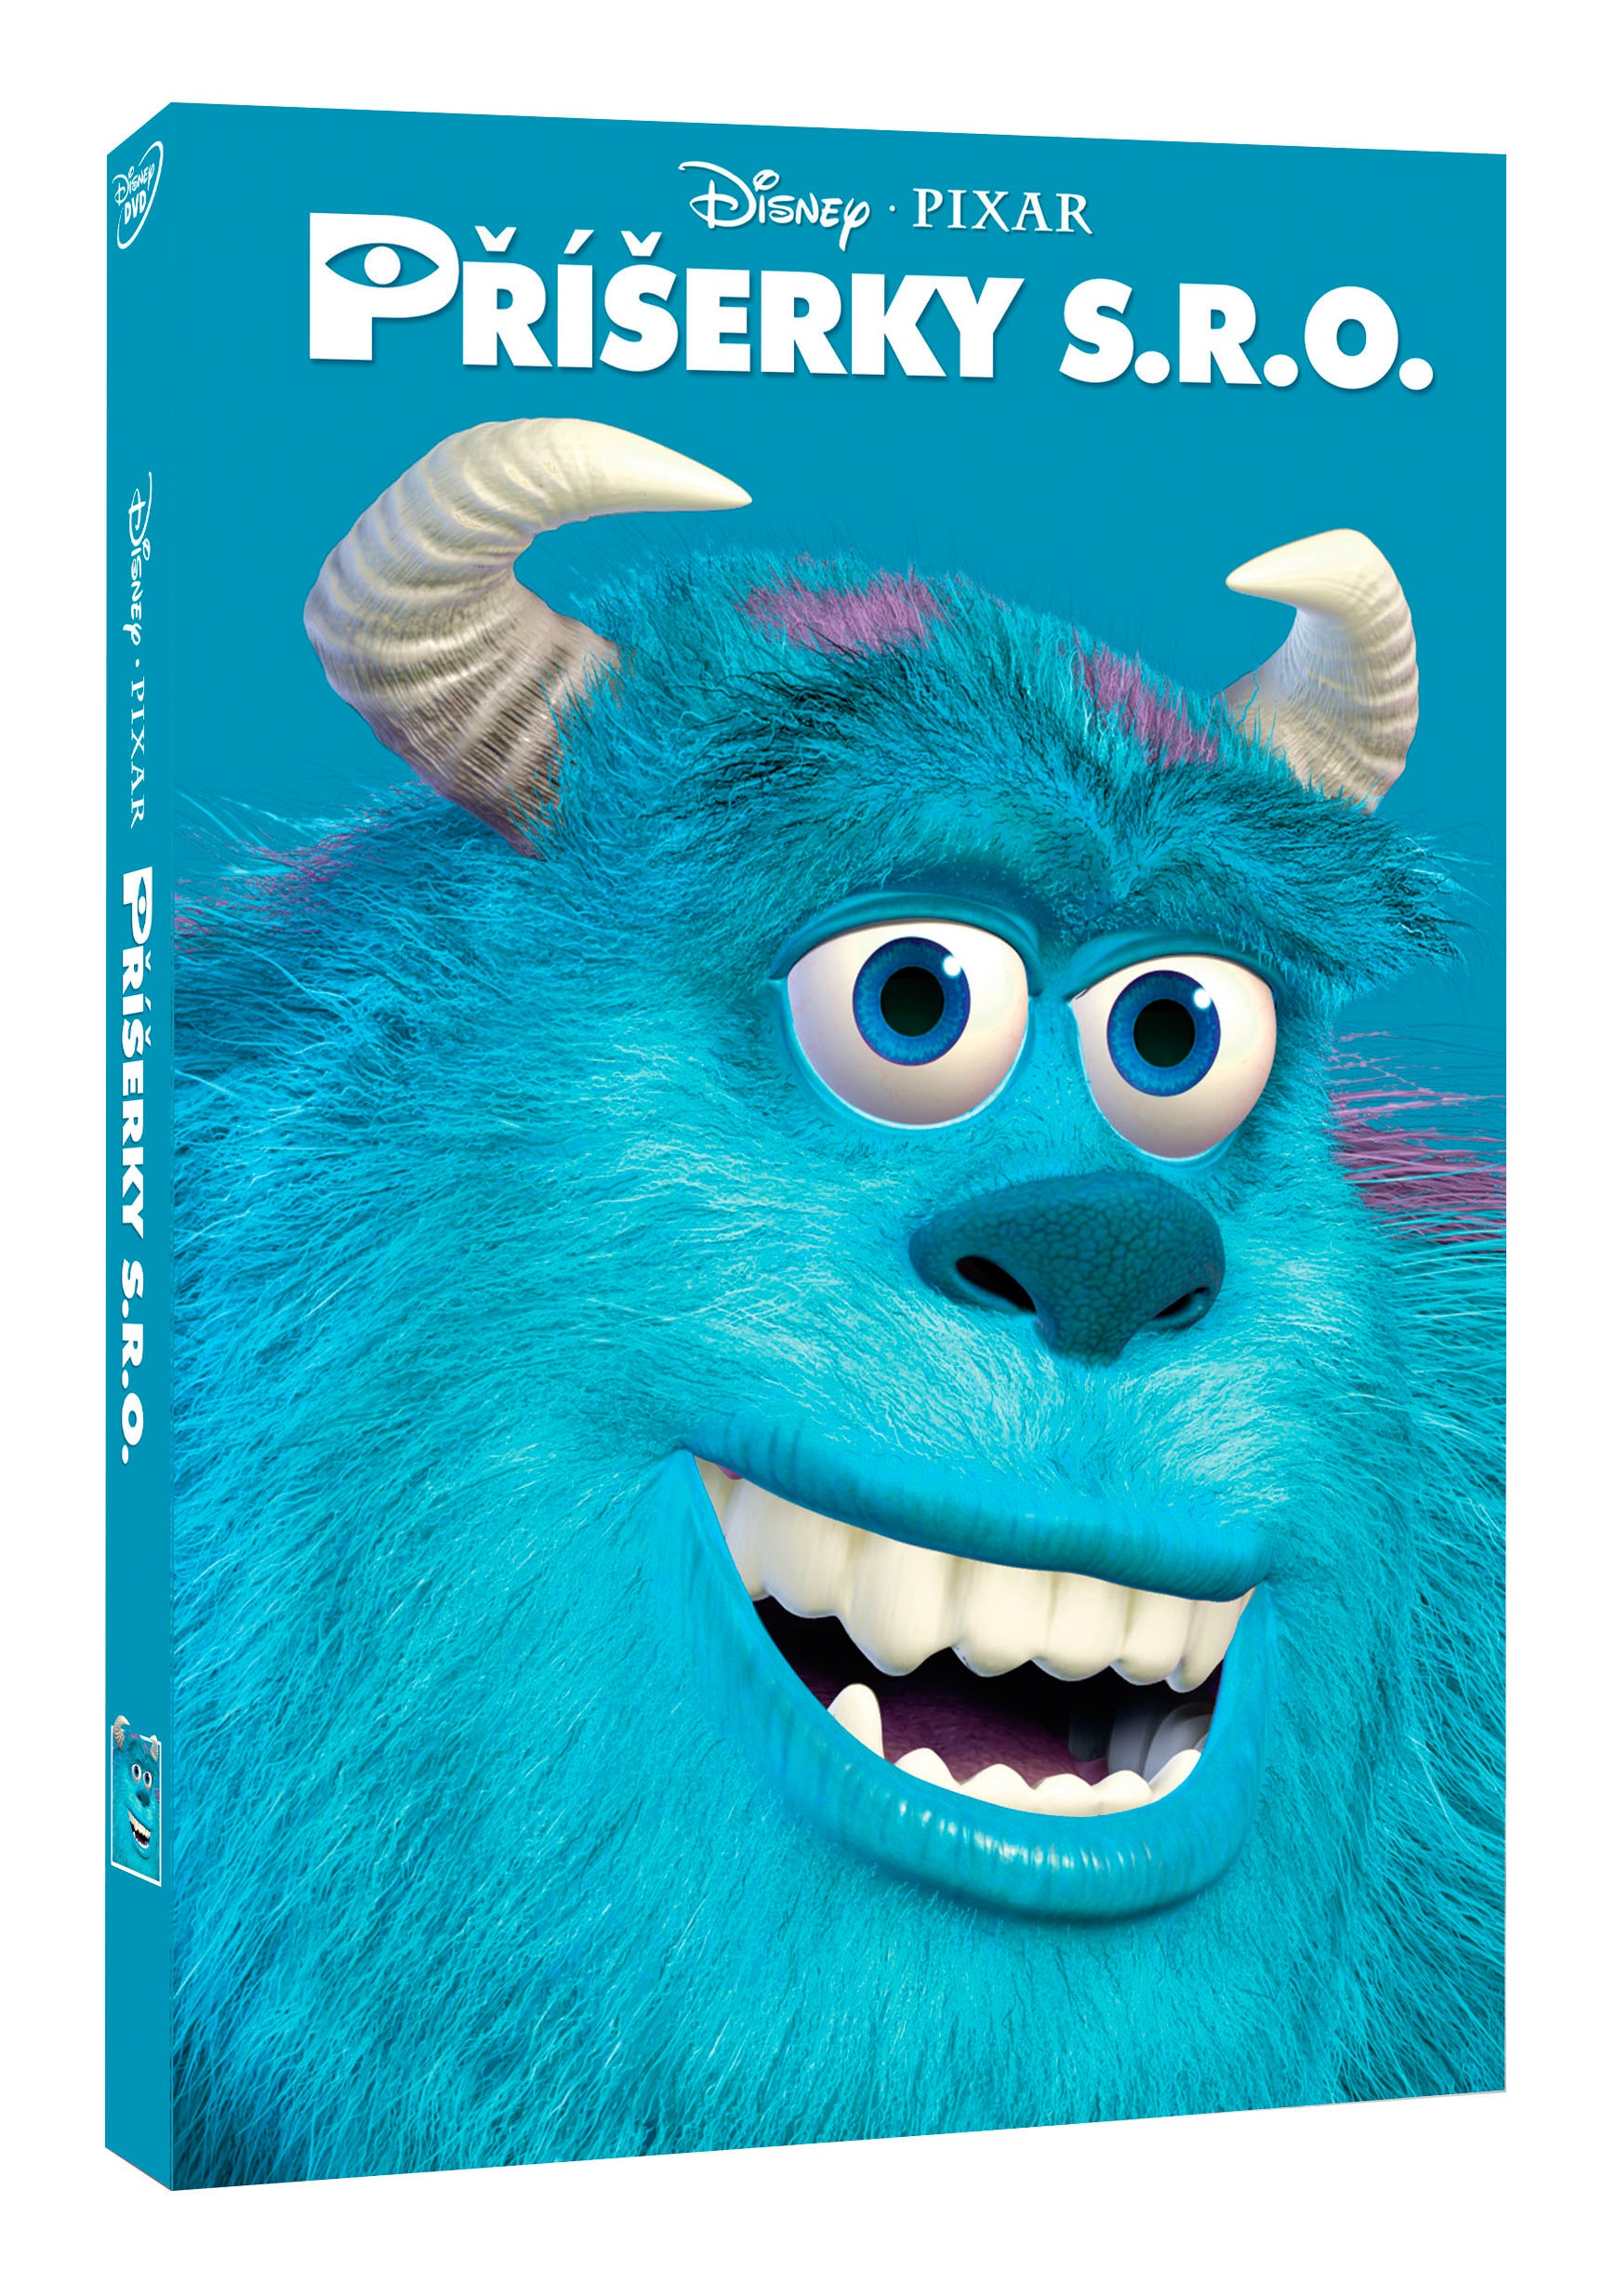 Priserky s.r.o. - Disney Pixar edice (Monsters, Inc.)